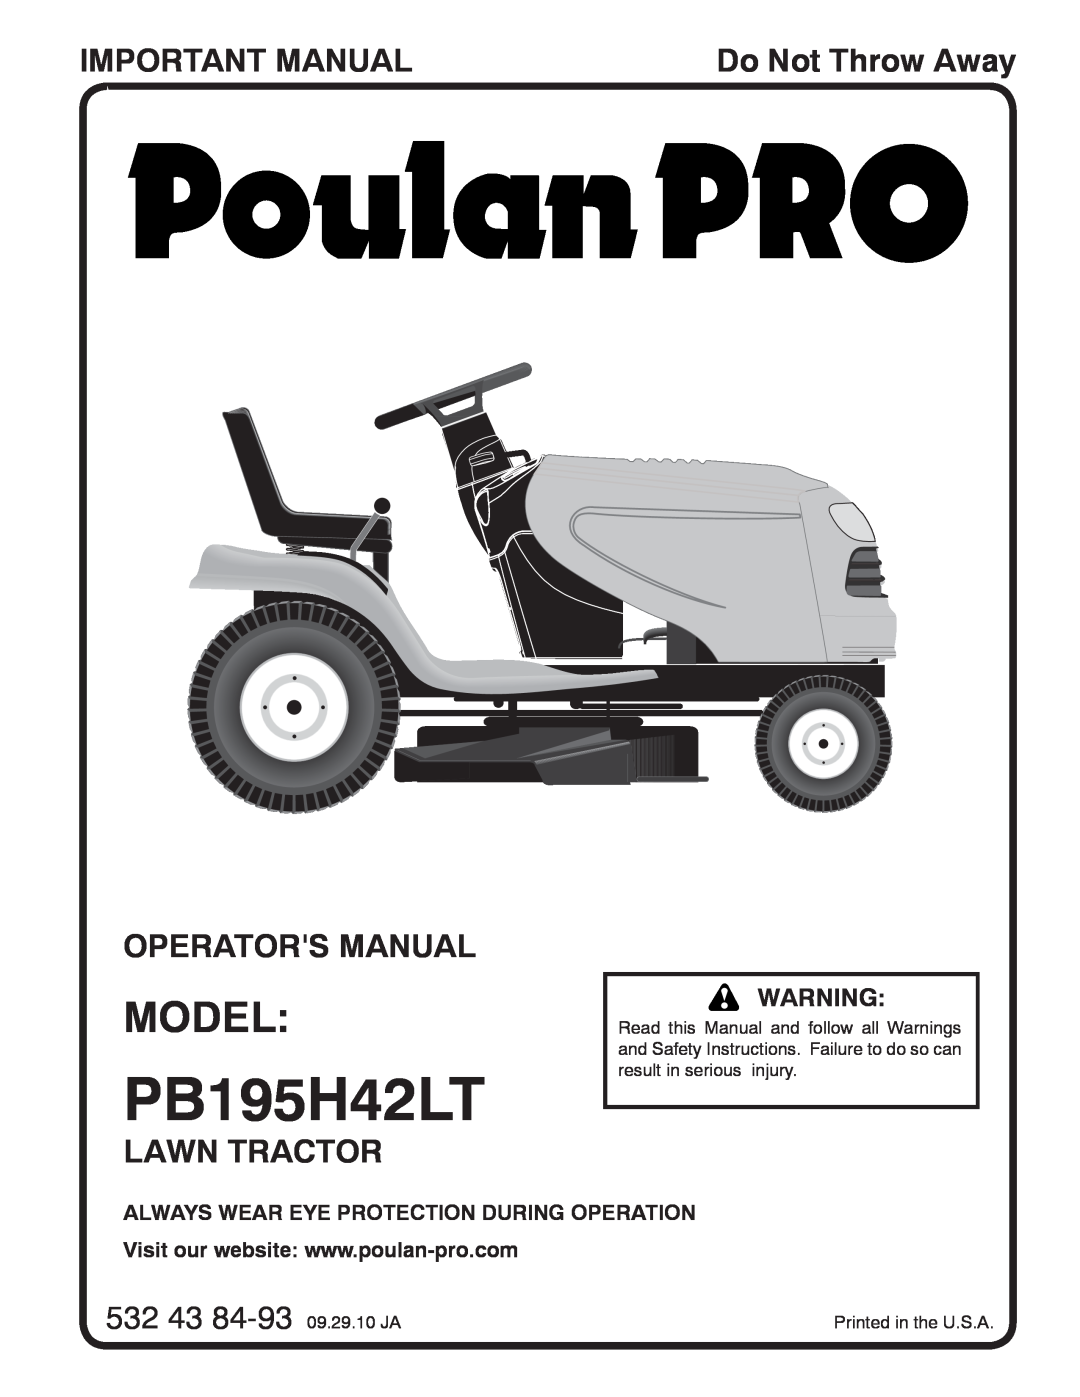 Poulan 96048001800 manual Model, Important Manual, Operators Manual, Lawn Tractor, PB195H42LT, 532 43 84-93 09.29.10 JA 